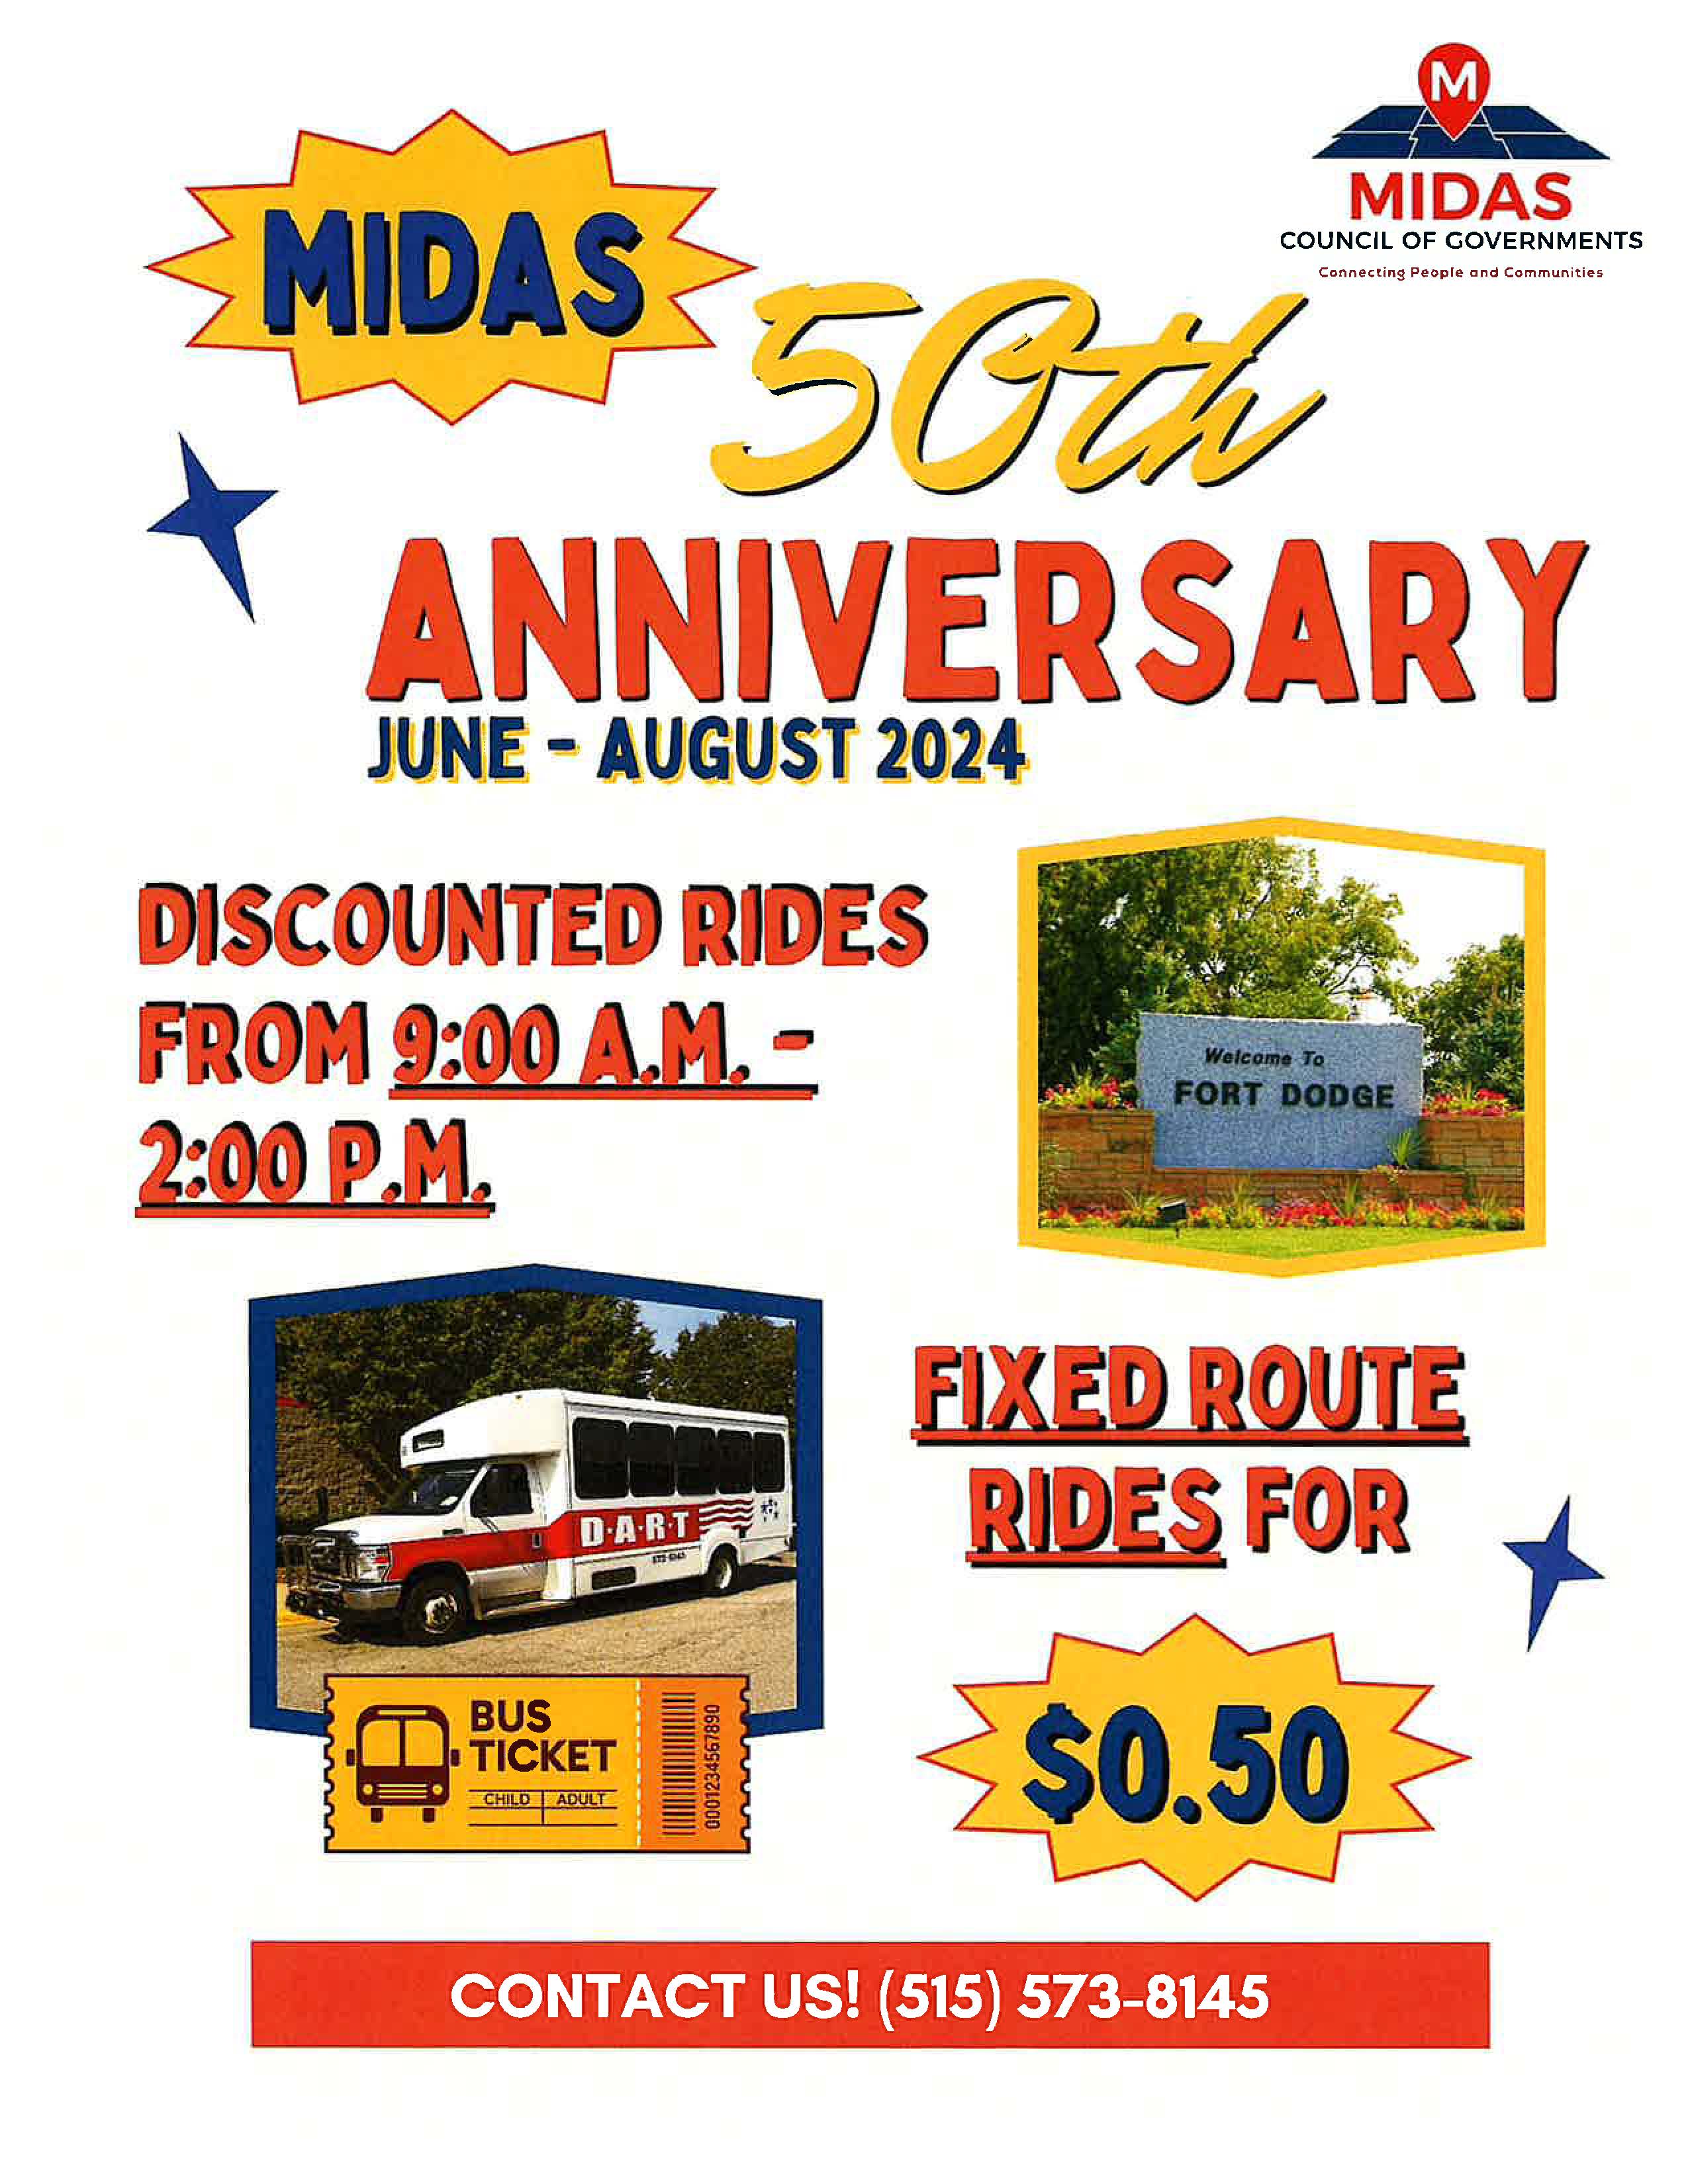 Midas Anniversary Bus Rides Flyer